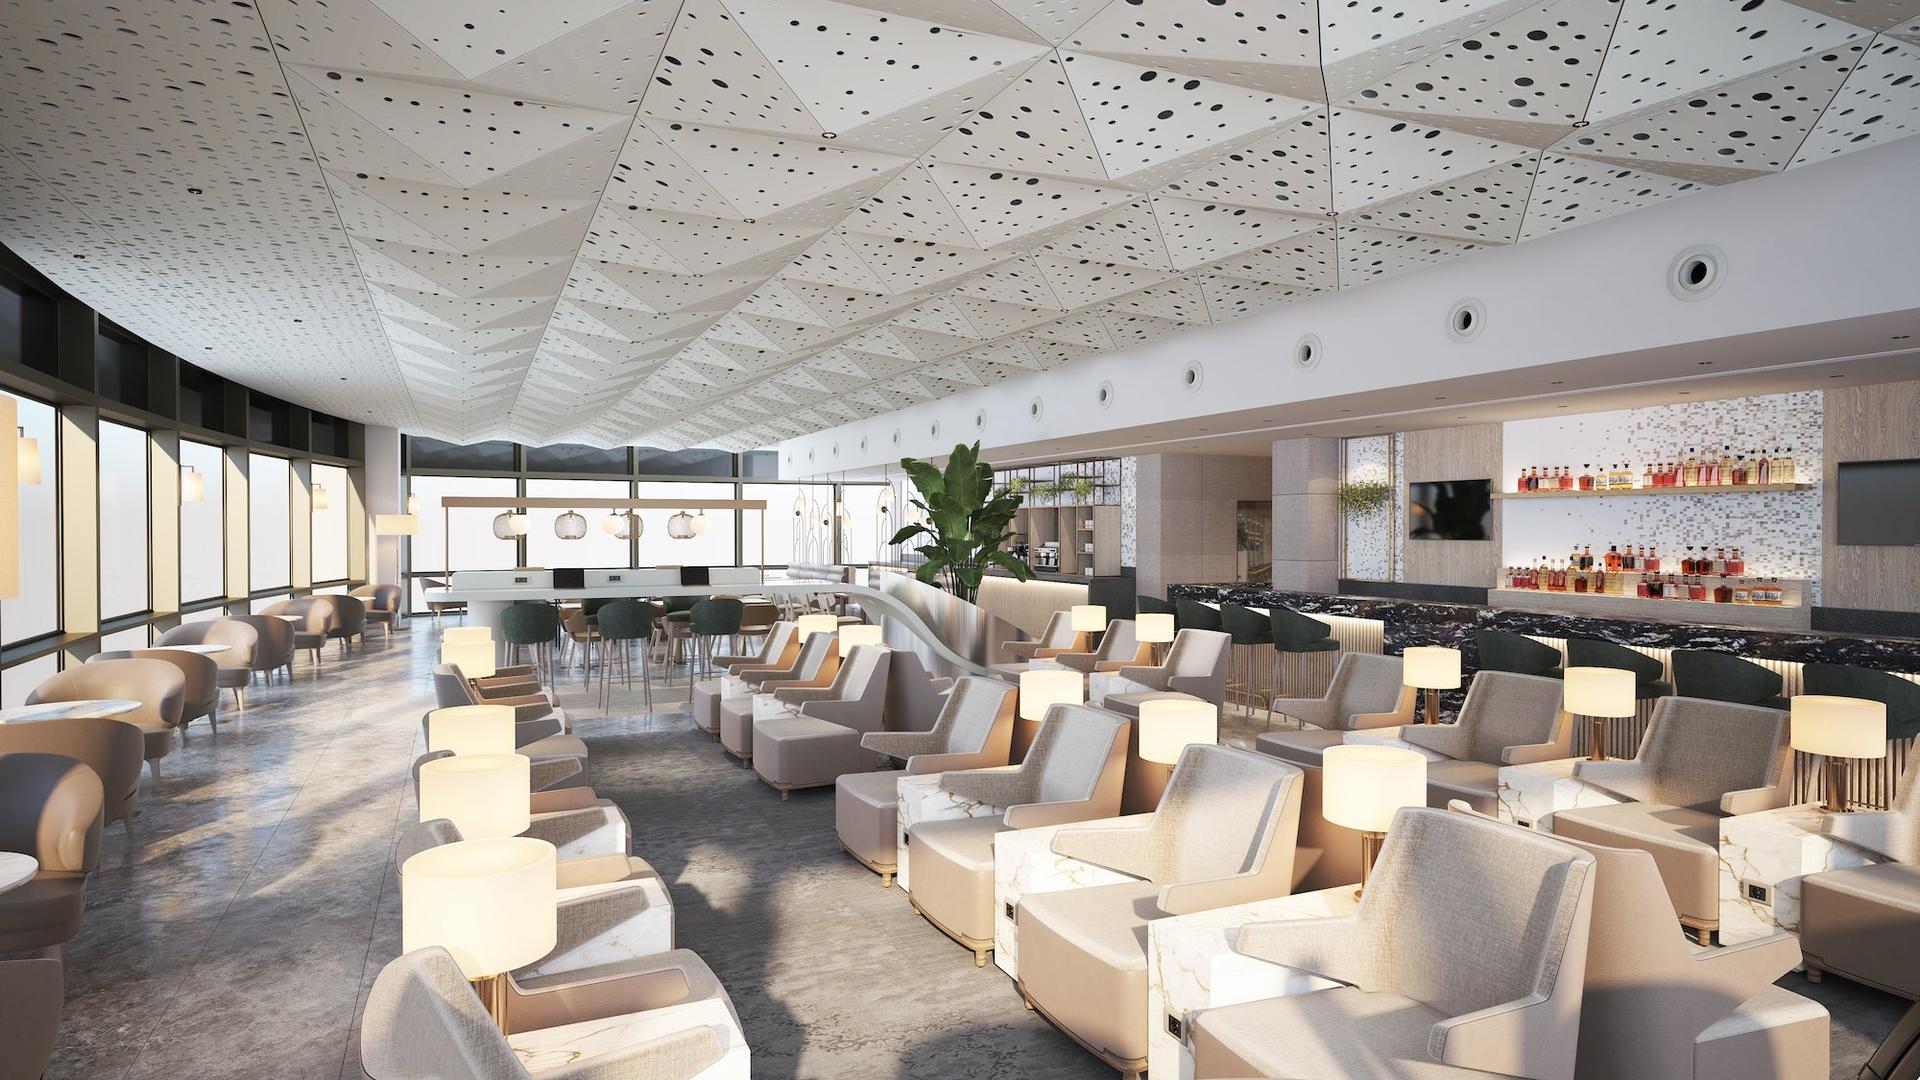 Plaza Premium Lounge (Bosphorus) image 1 of 7